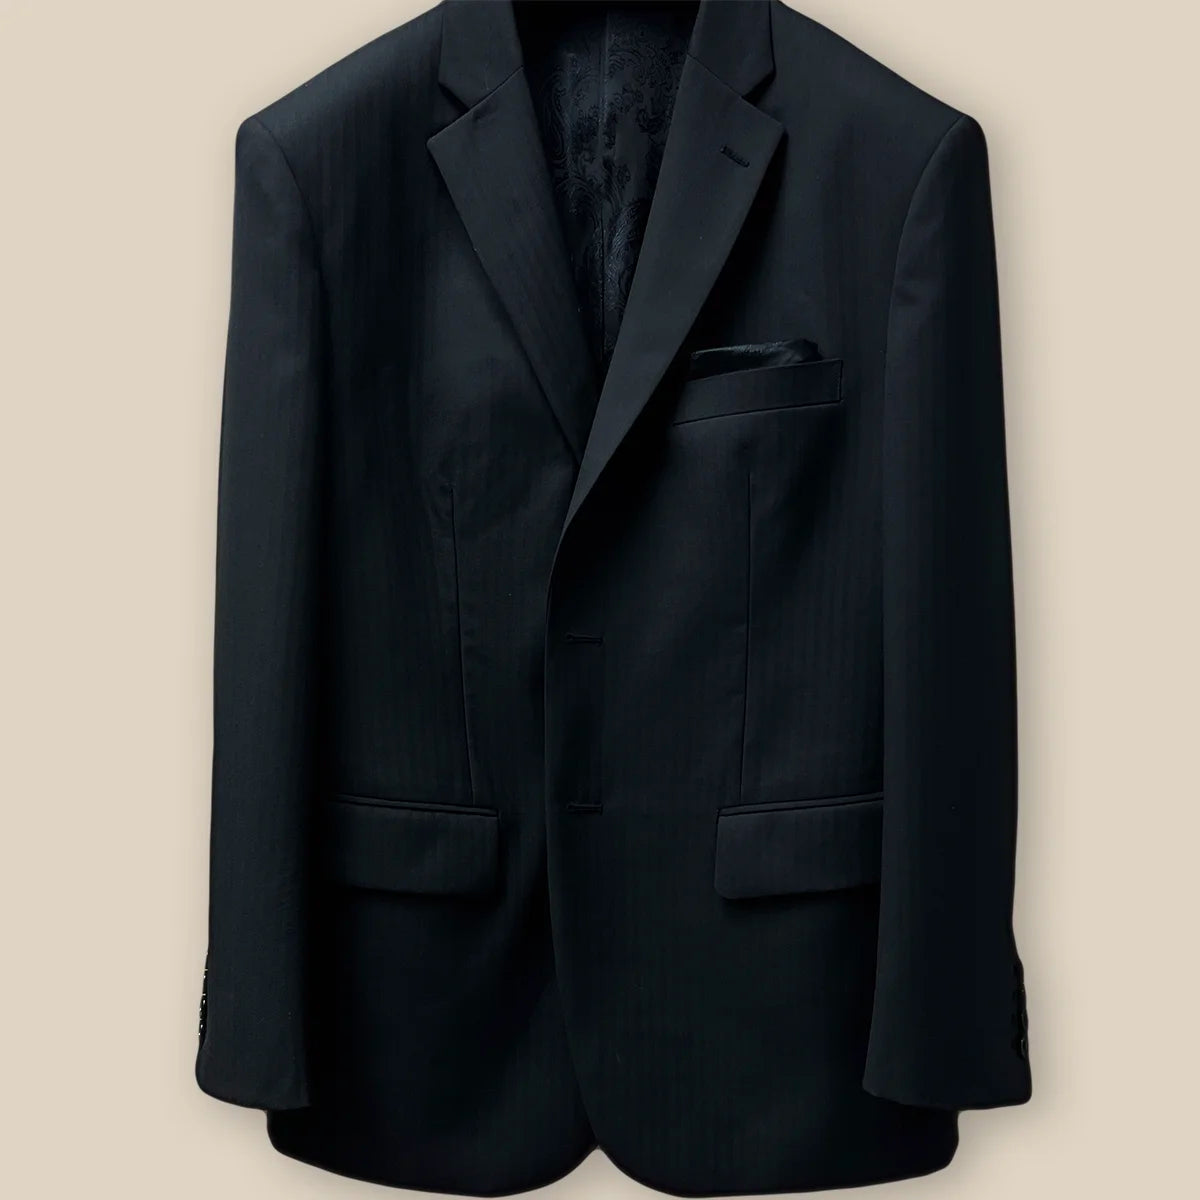 Buttonhole panel of a black herringbone men's suit.